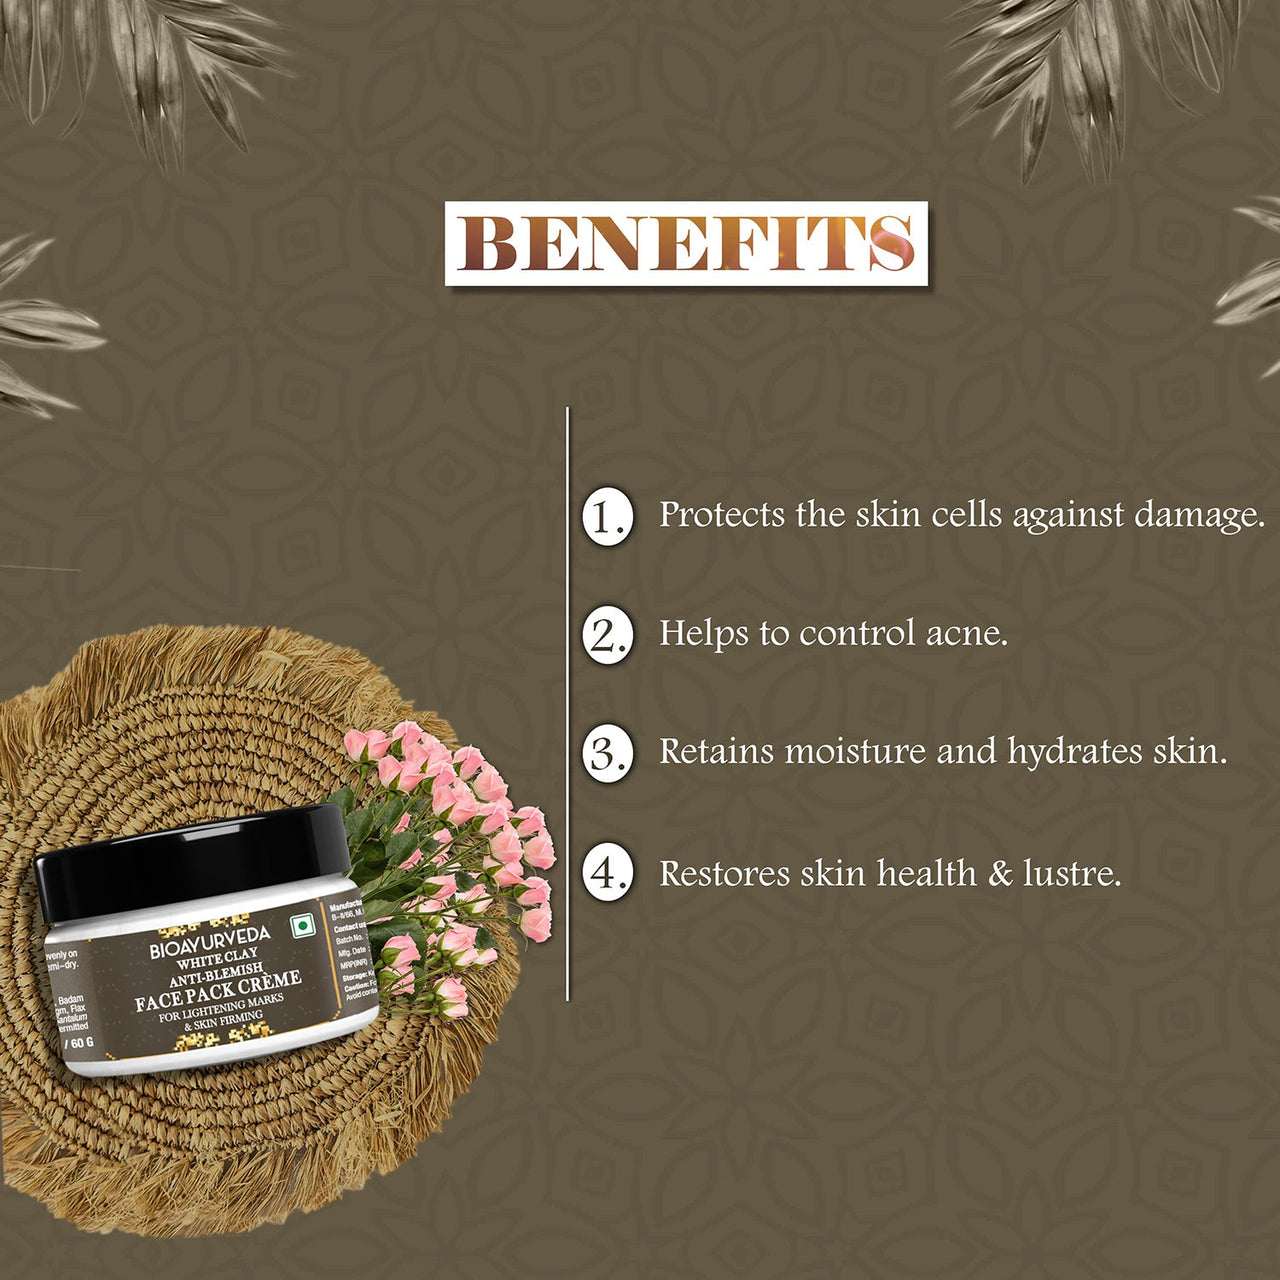 White Clay Anti Blemish Face Pack Cream Benefits